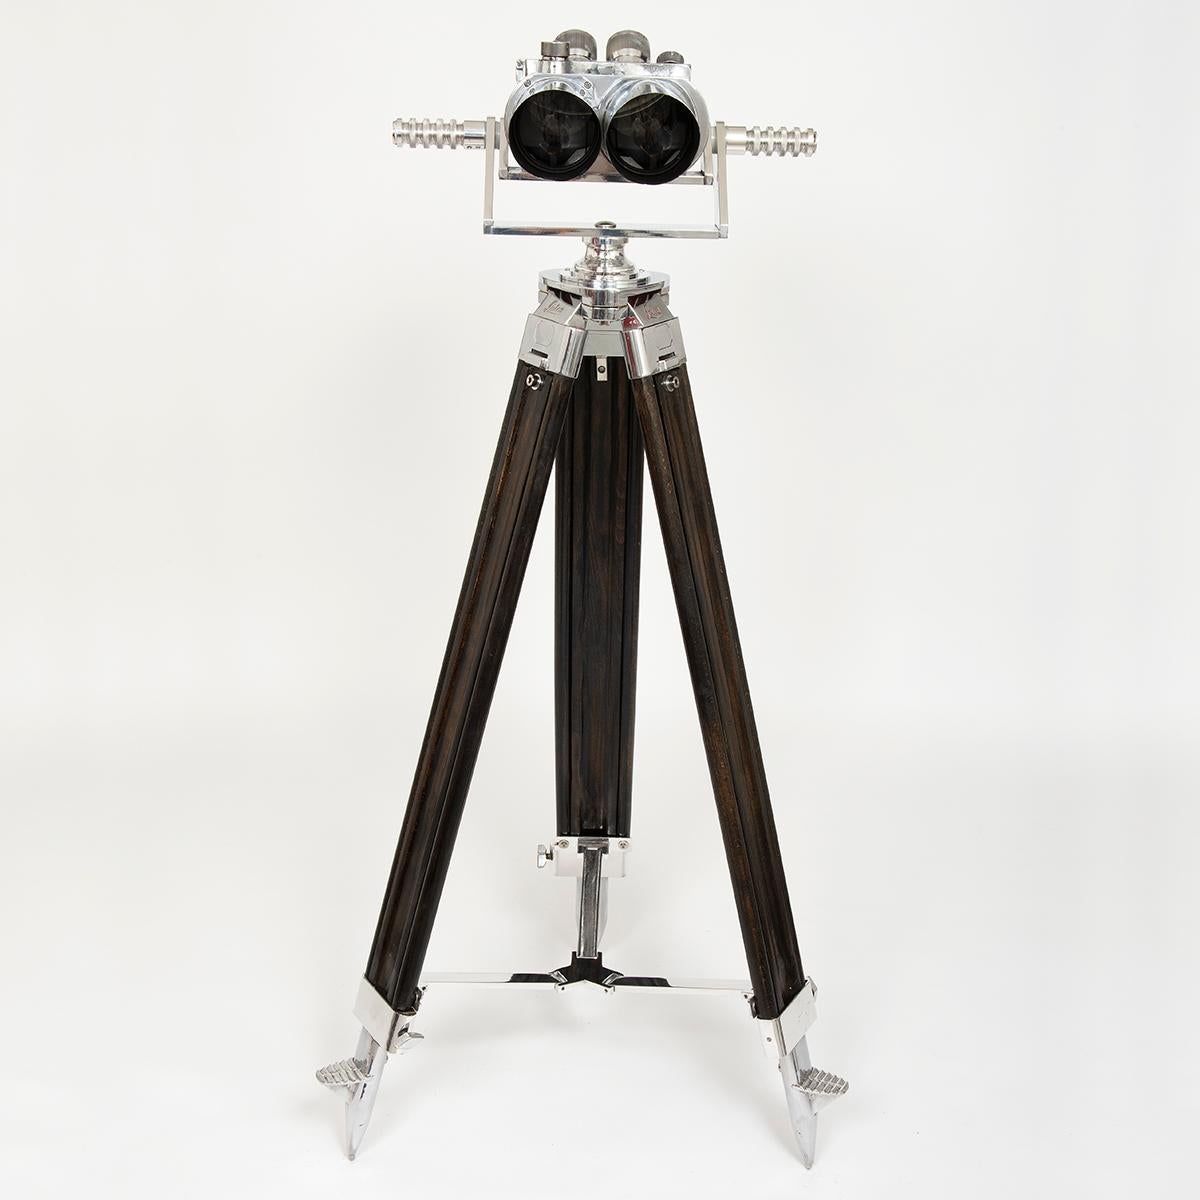 Desirable Jos Schneider & Co DKL Binoculars, Rare & Historical Object 3